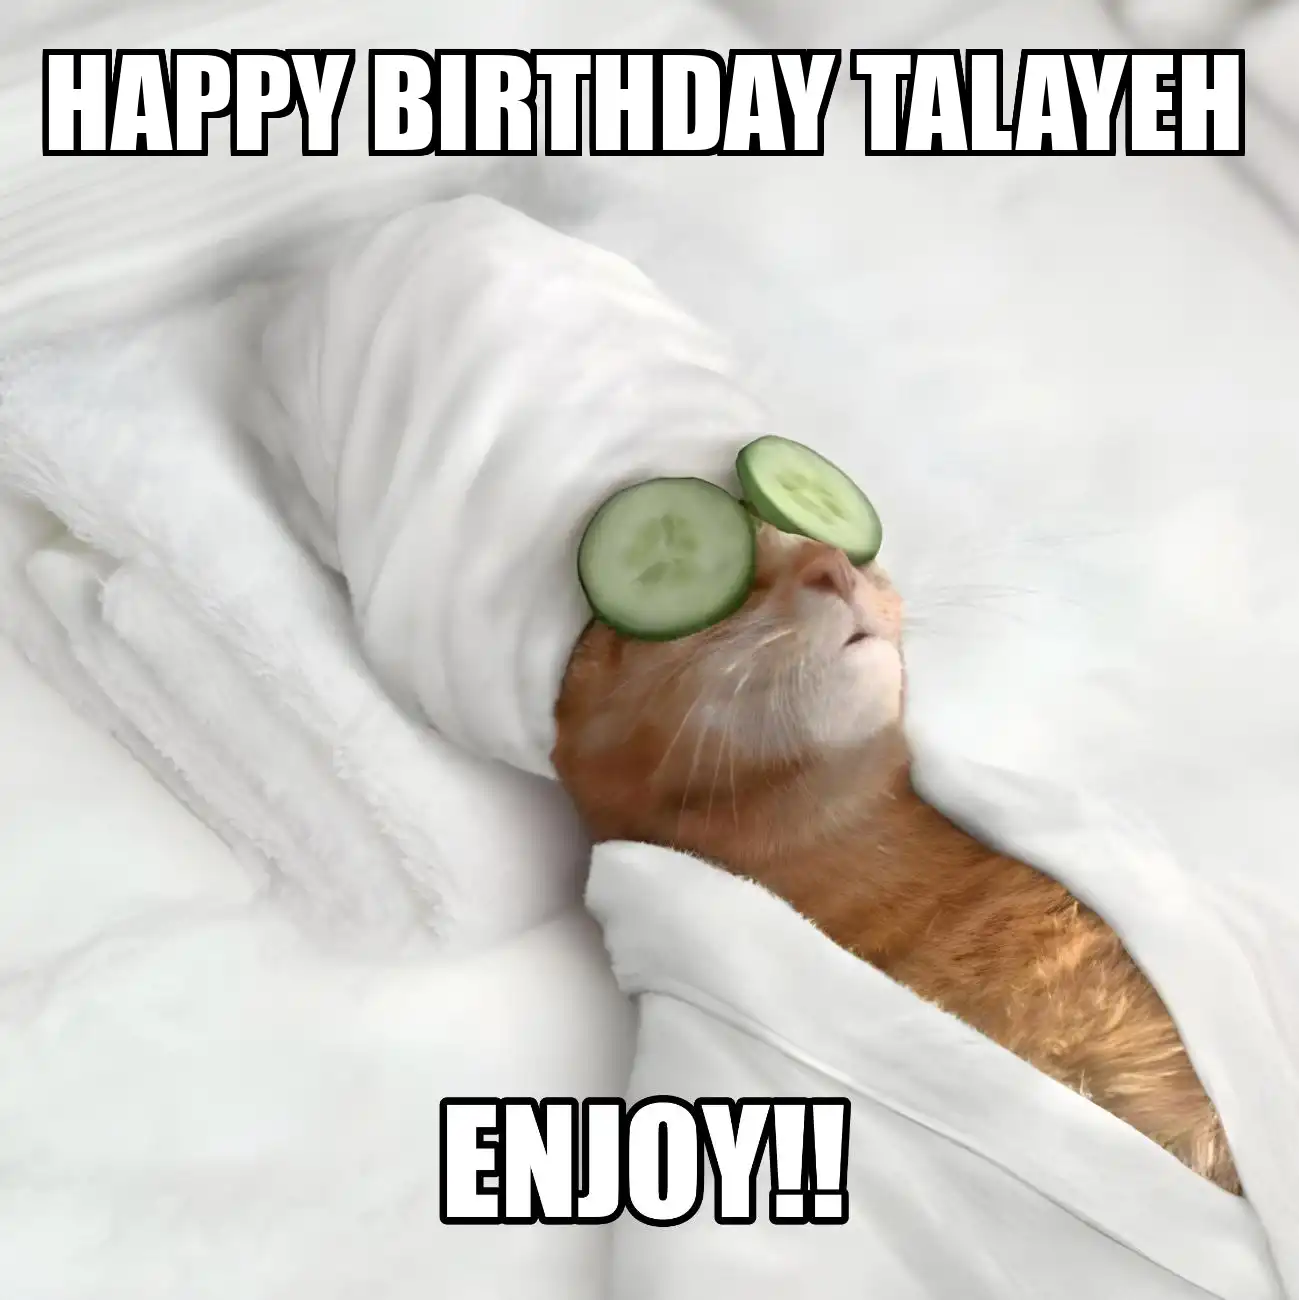 Happy Birthday Talayeh Enjoy Cat Meme